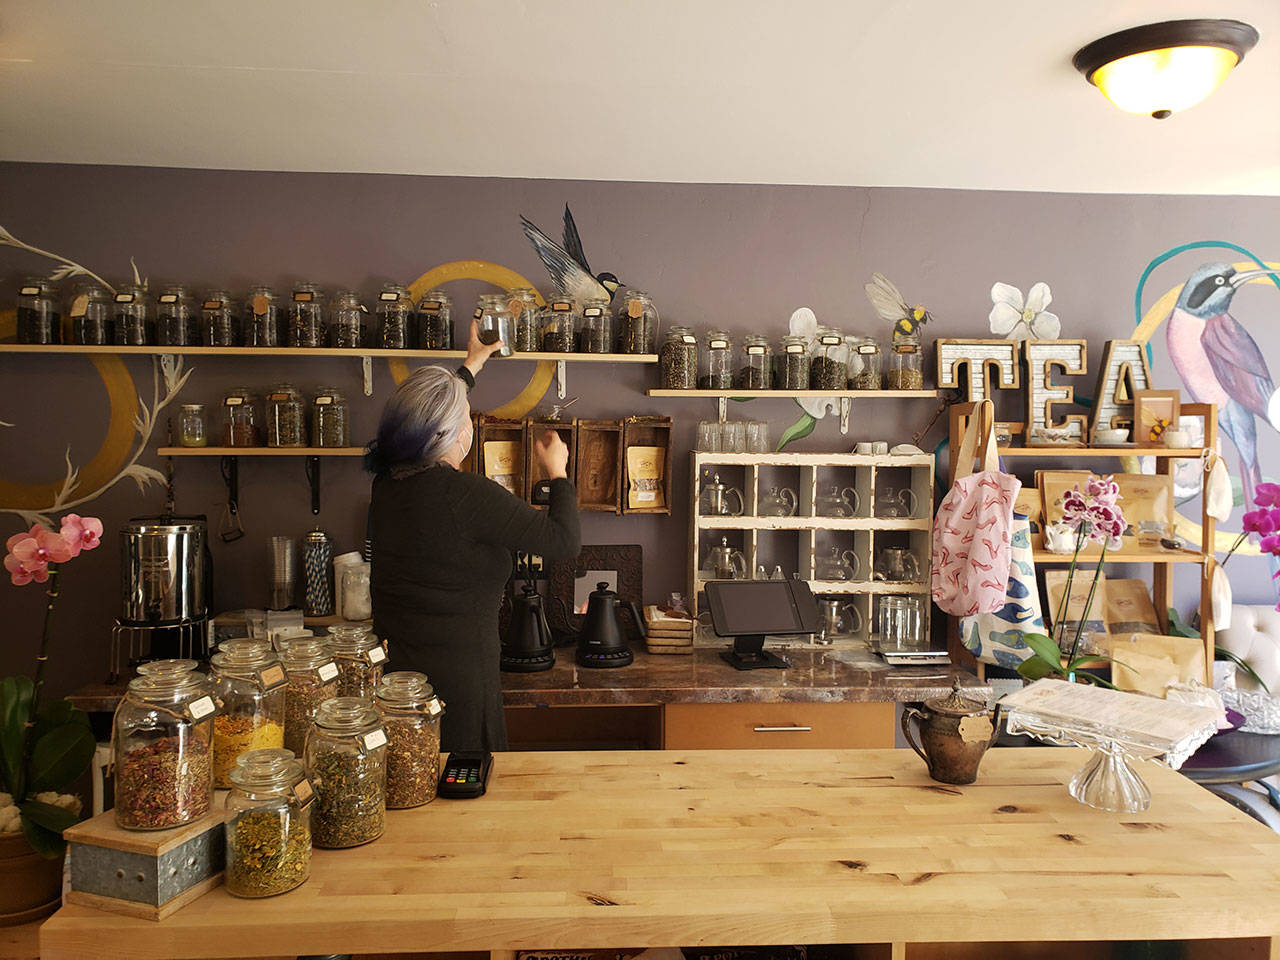 Tea & Apothecary Shop to restore historic buildings